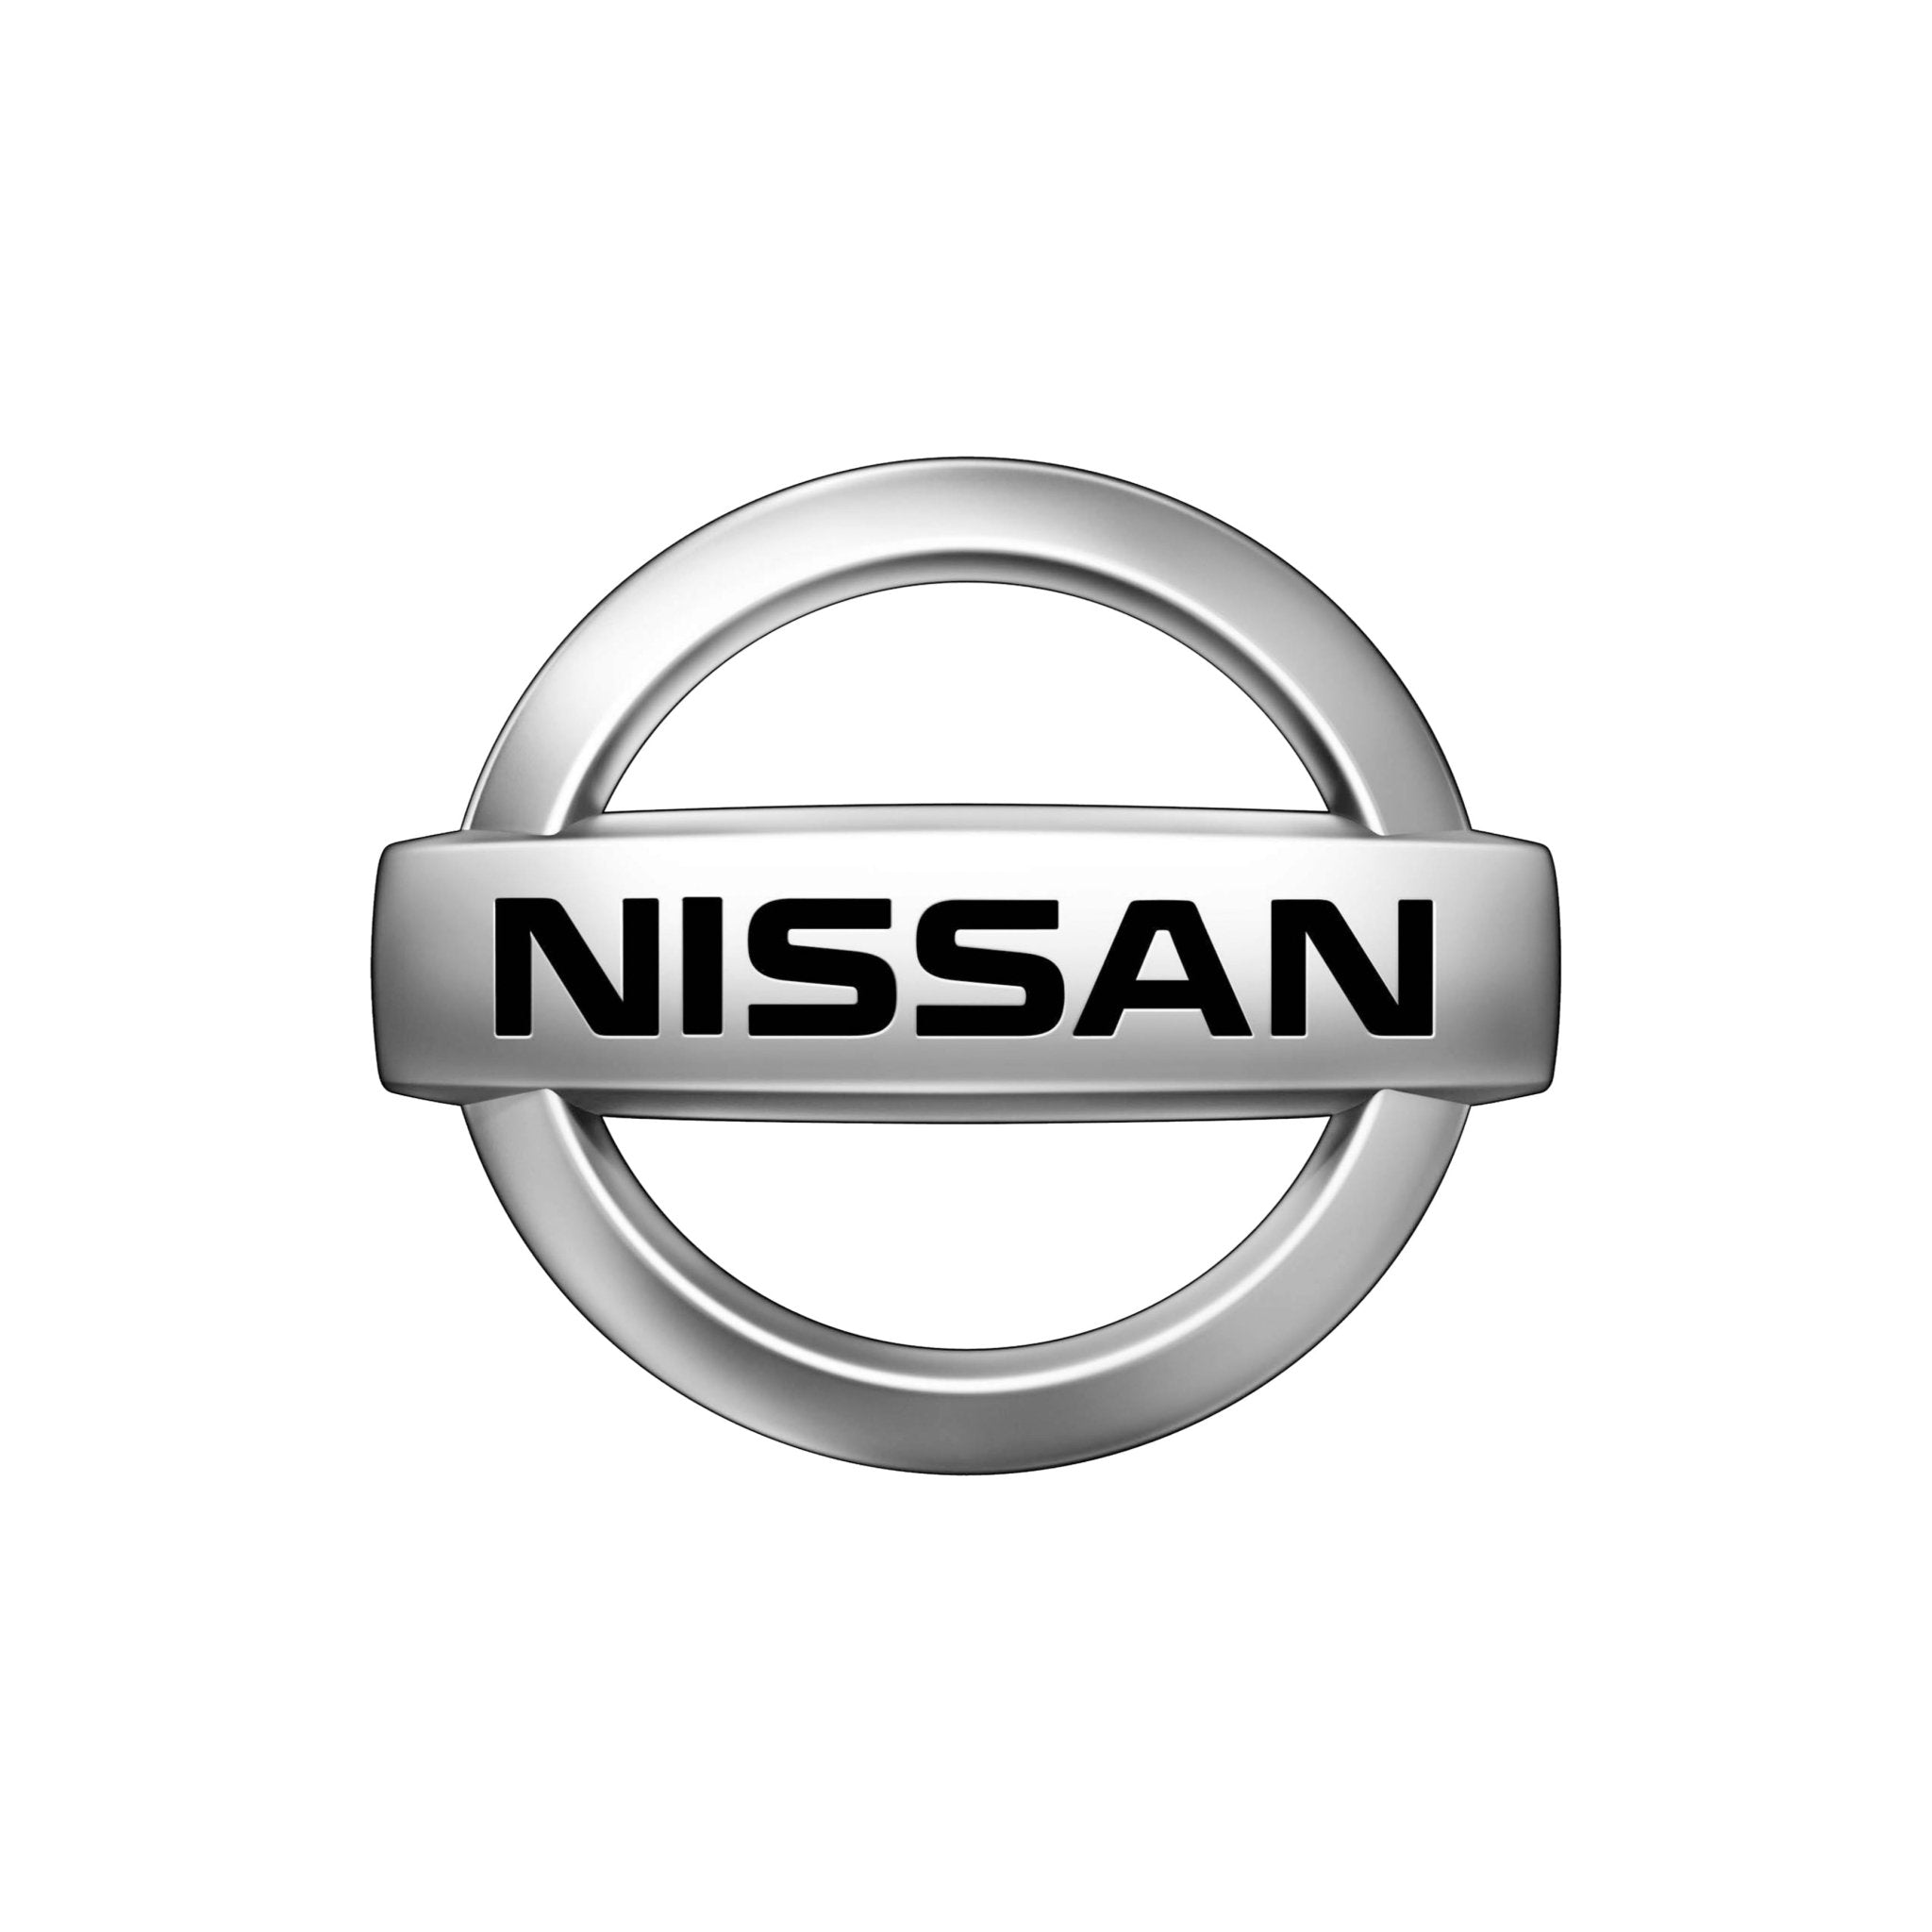 Nissan - MiniCubez